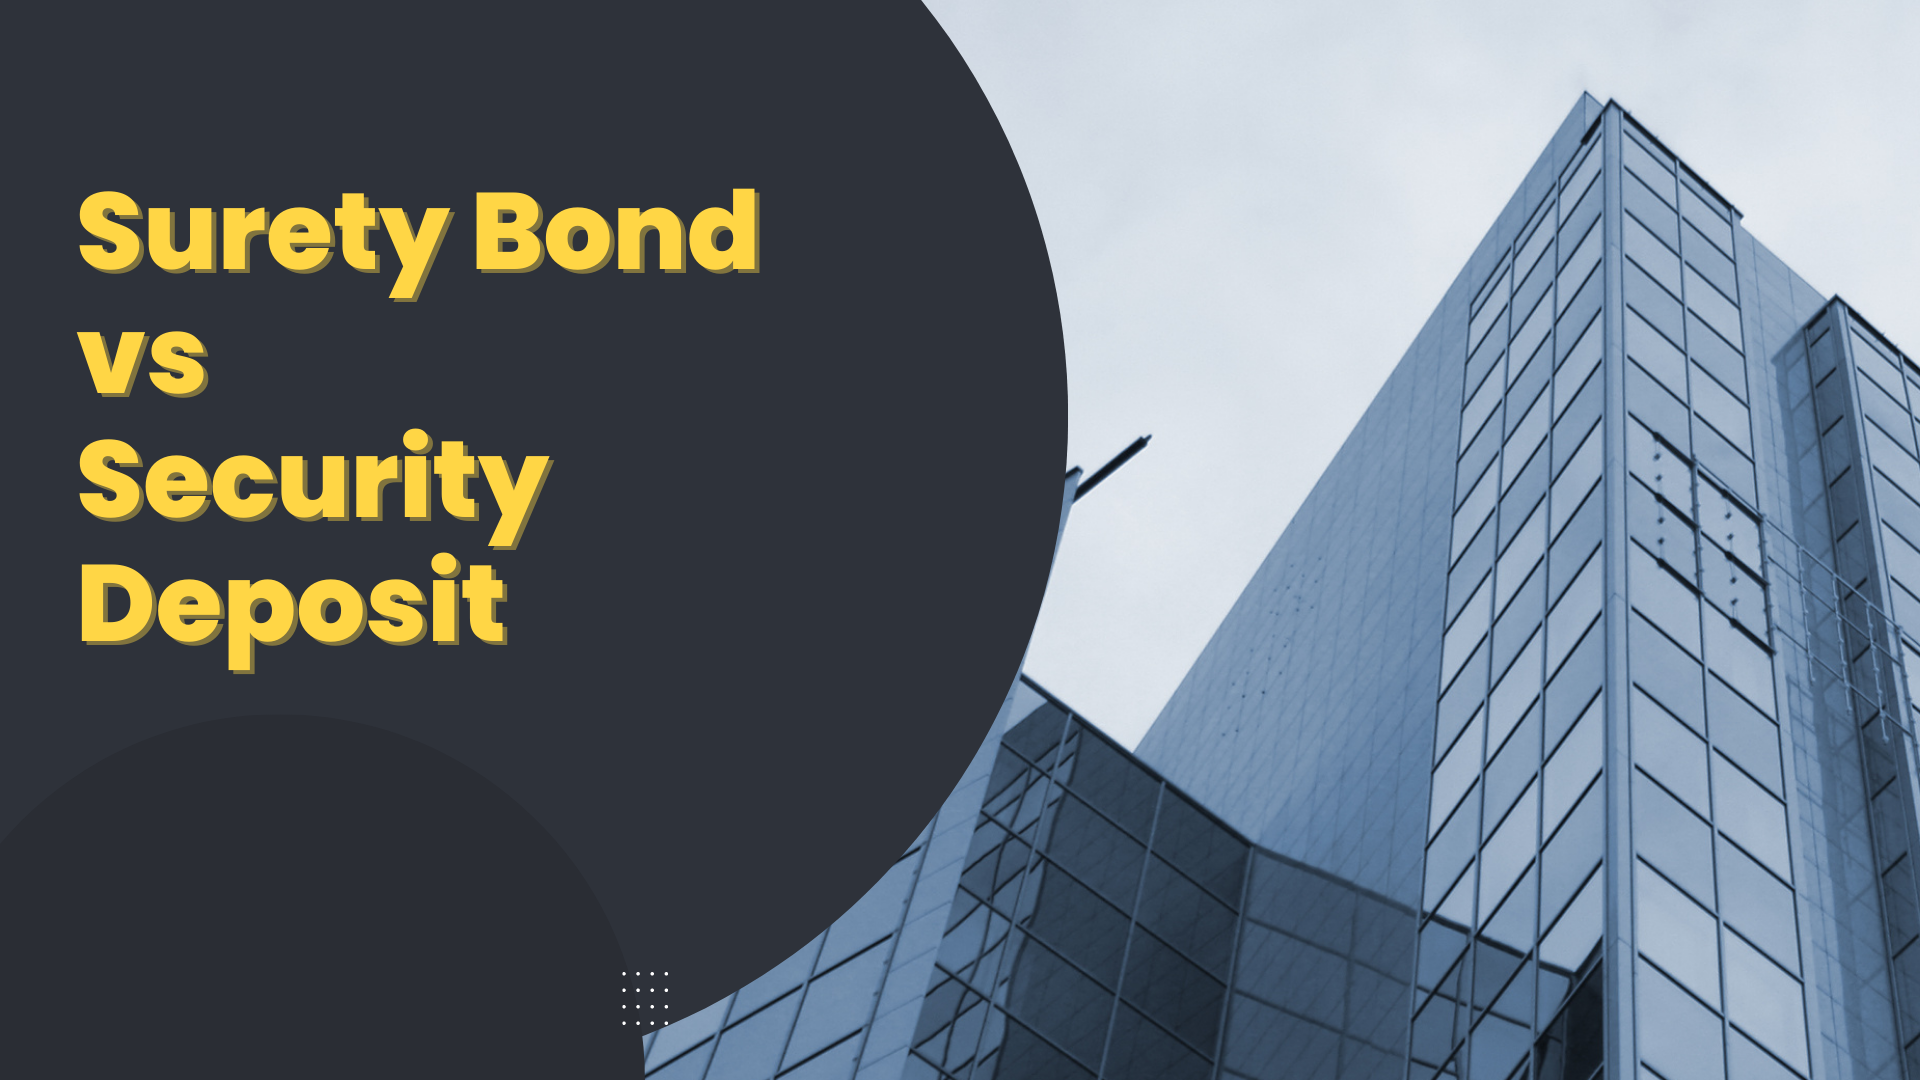 Surety Bond-Surety Bond vs Security Deposit